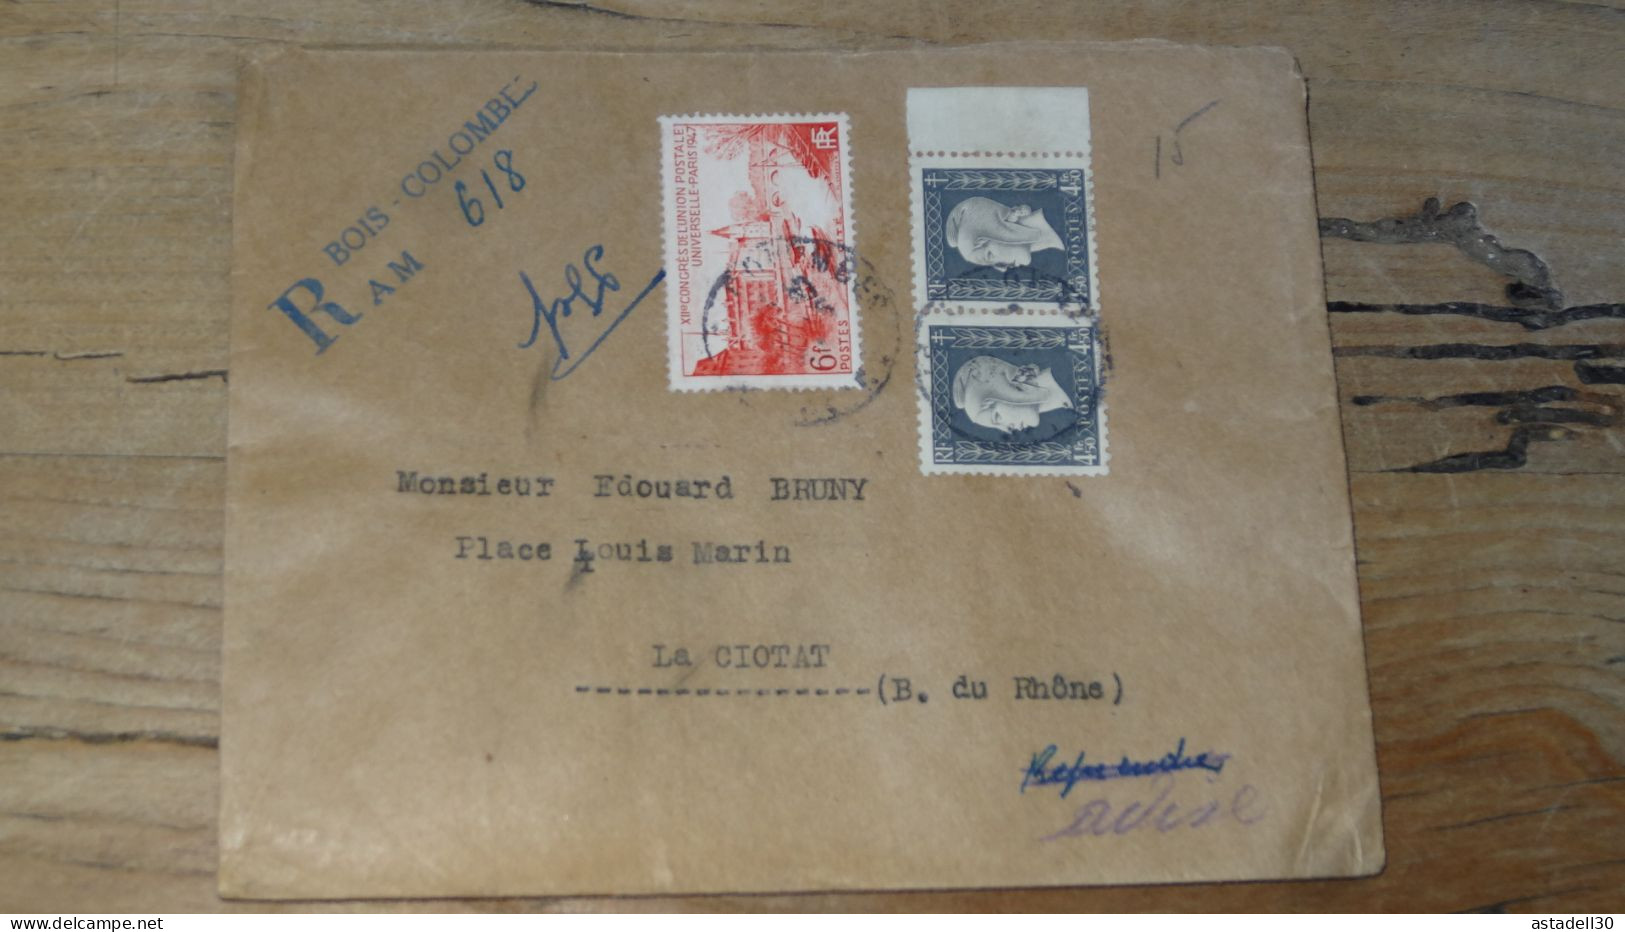 Enveloppe Recommandée Bois Colombes Pour LA CIOTAT - 1947  ............BOITE1.......... 450 - 1921-1960: Periodo Moderno